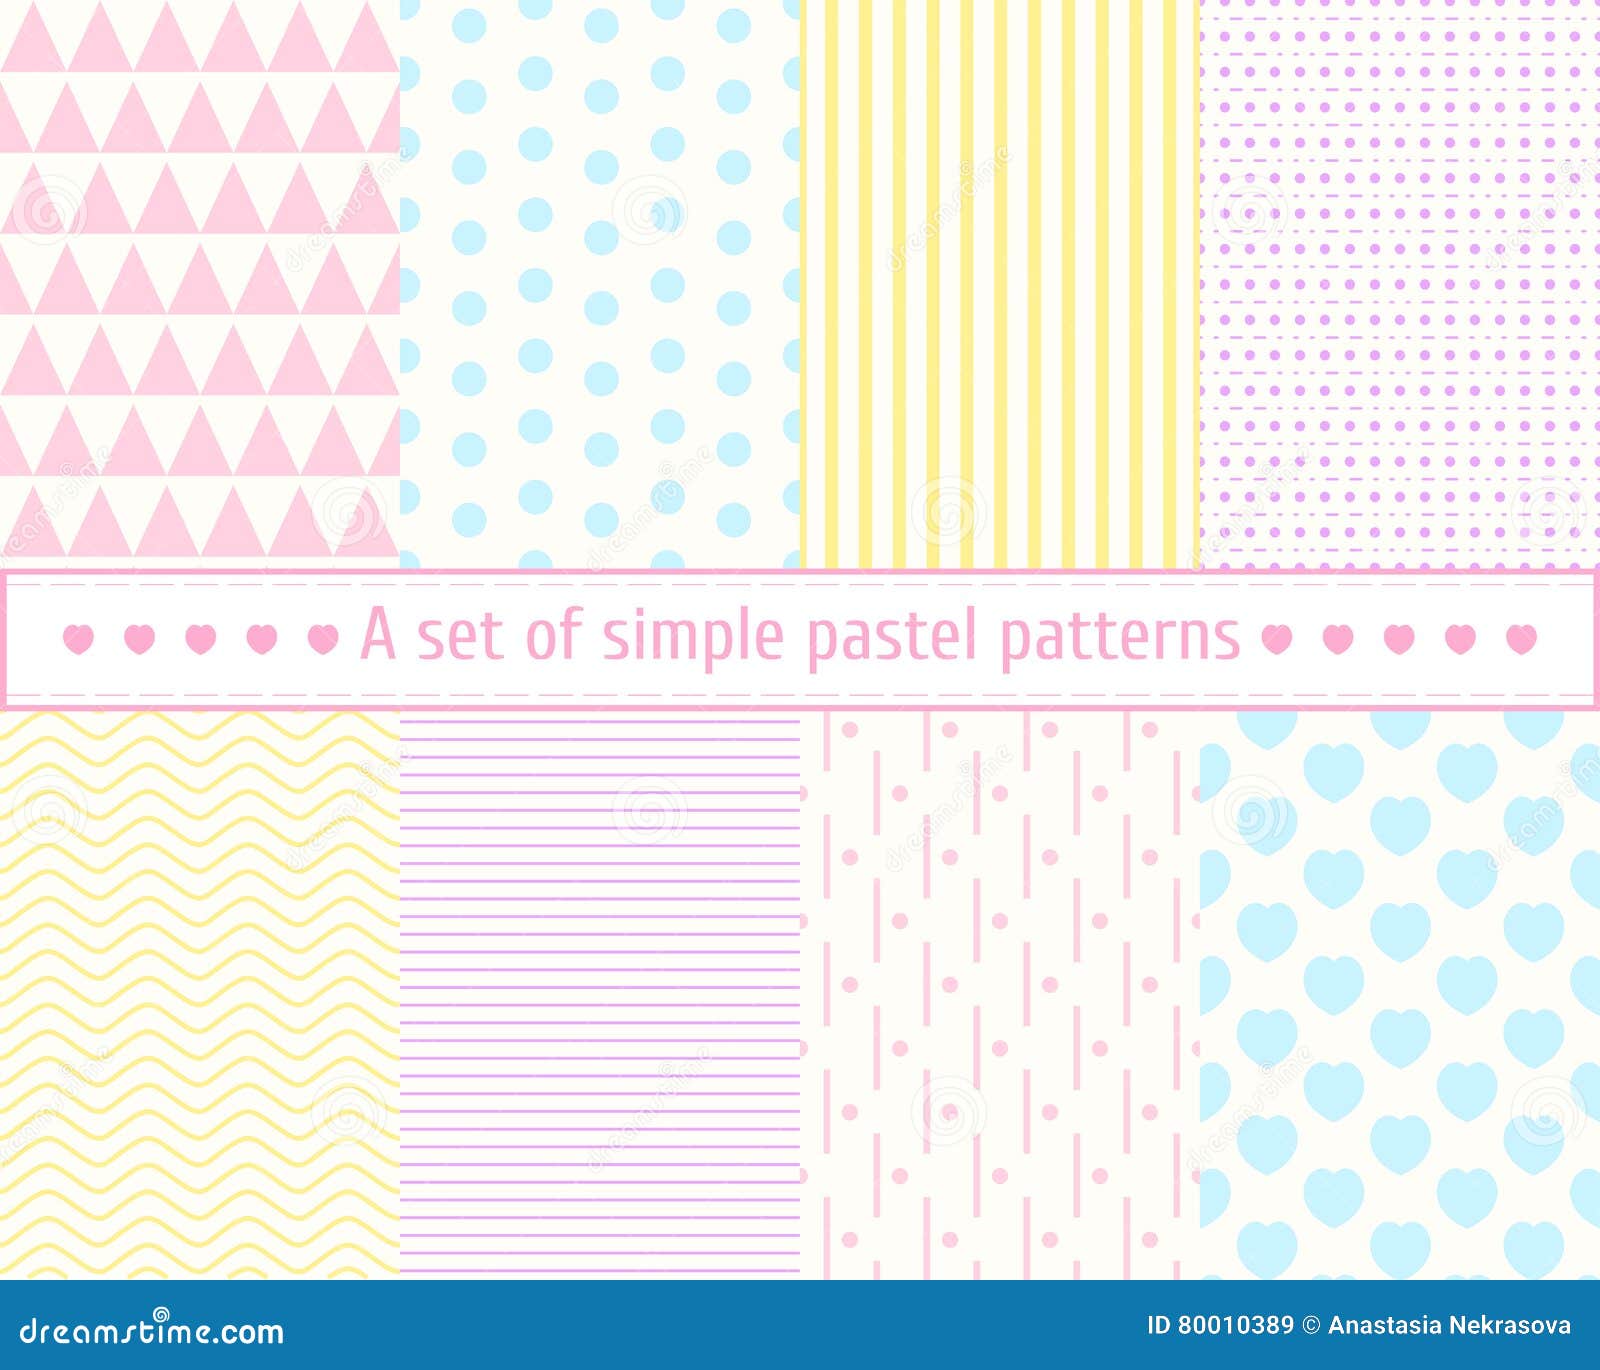 pastel backgrounds patterns